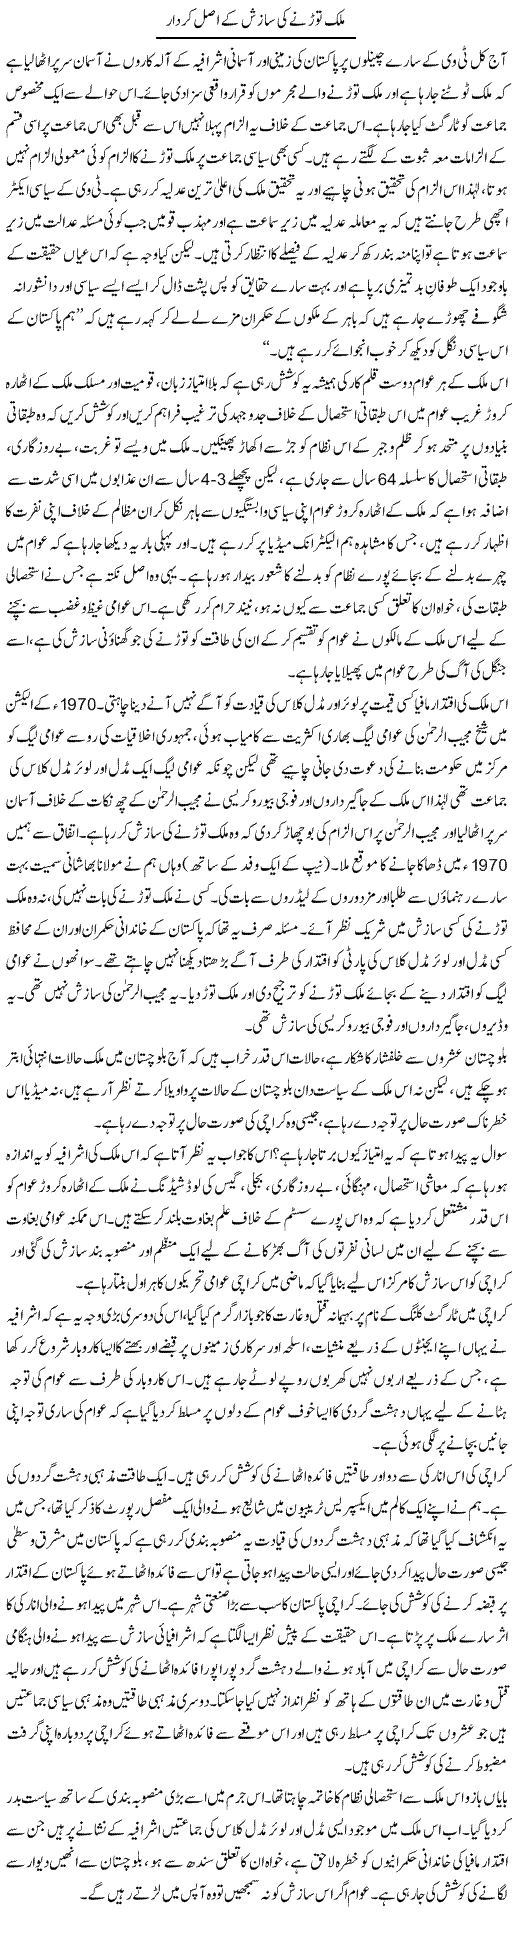 Plans of Breaking Pakistan Express Column Zaheer Akhtar 18 September 2011